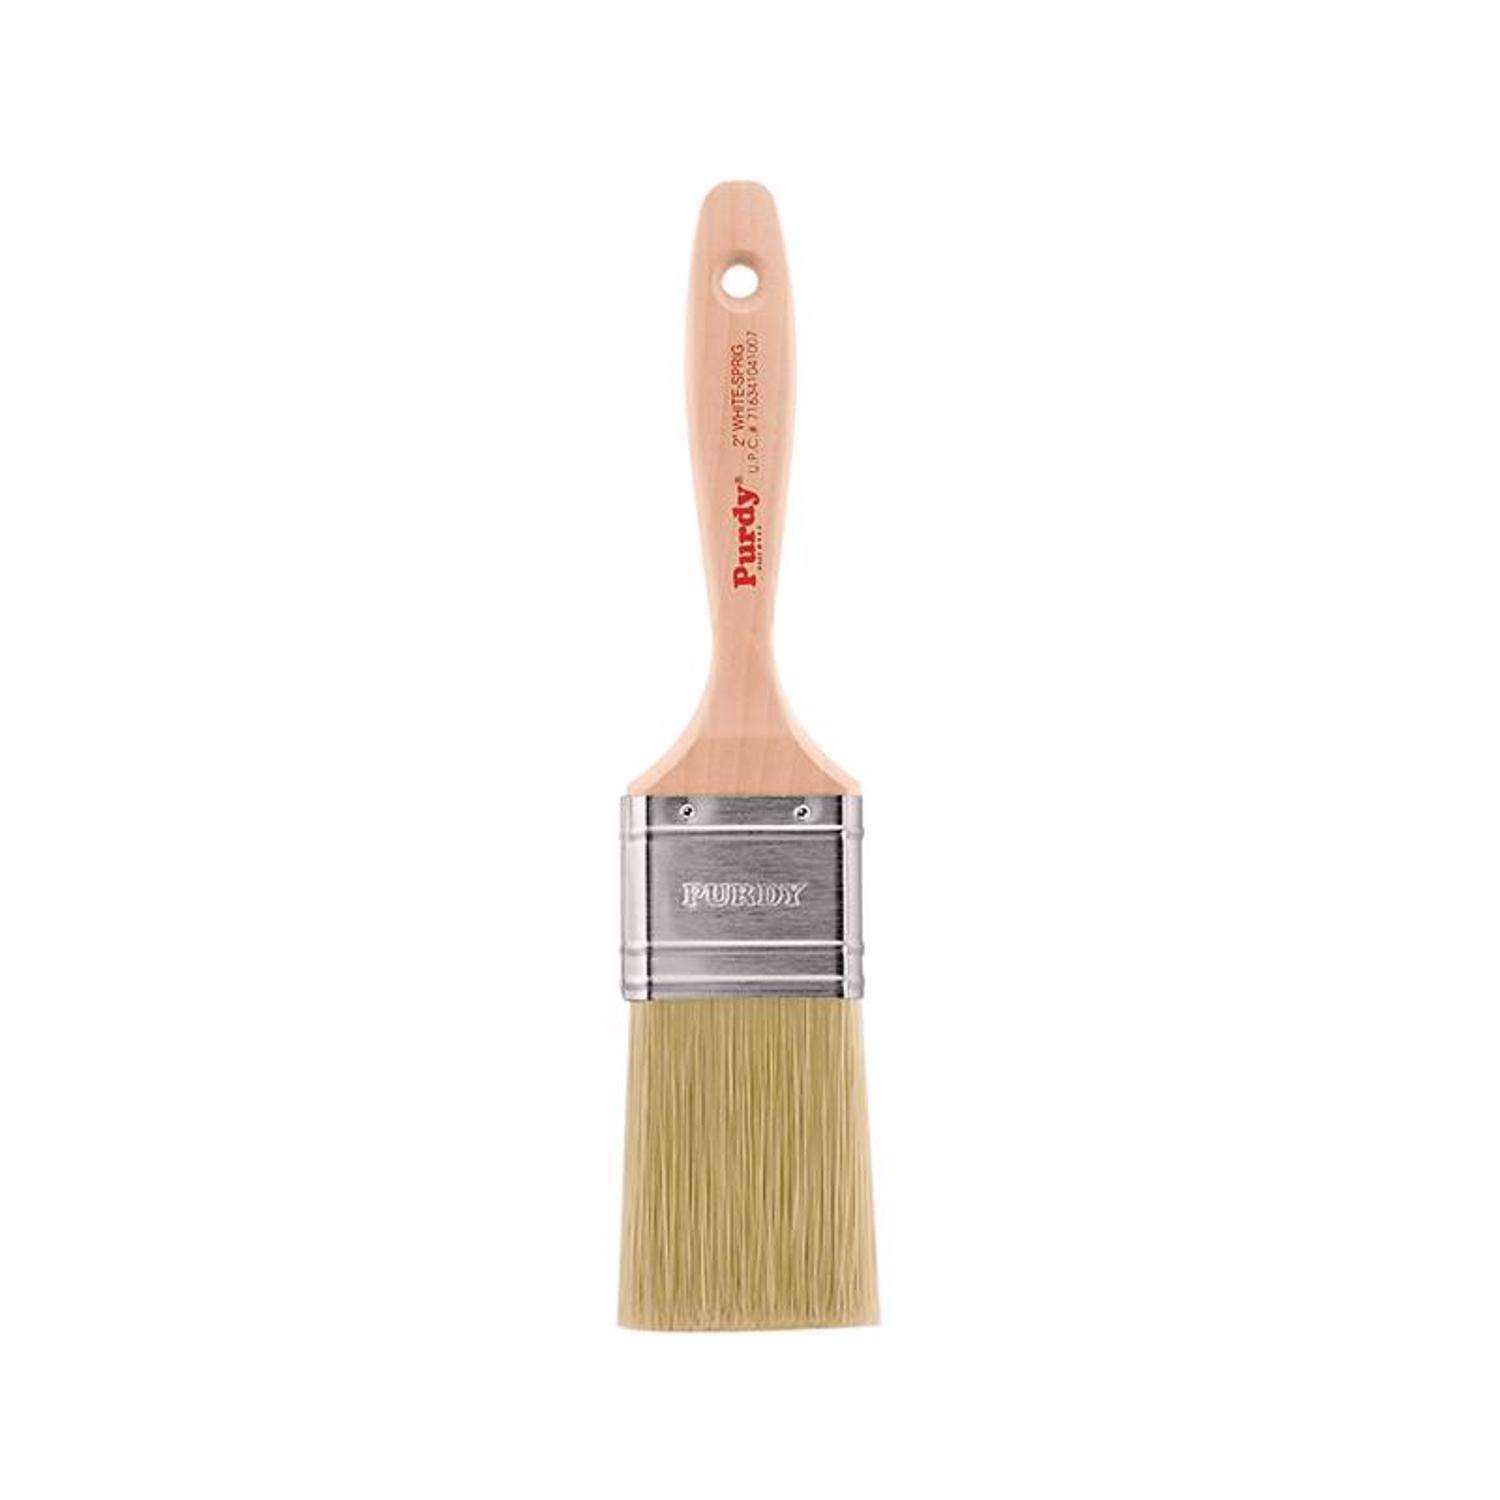 EZ Paint Brush | Angle Adjustable Flat Trim Paintbrush Set with Extension Pole, Red